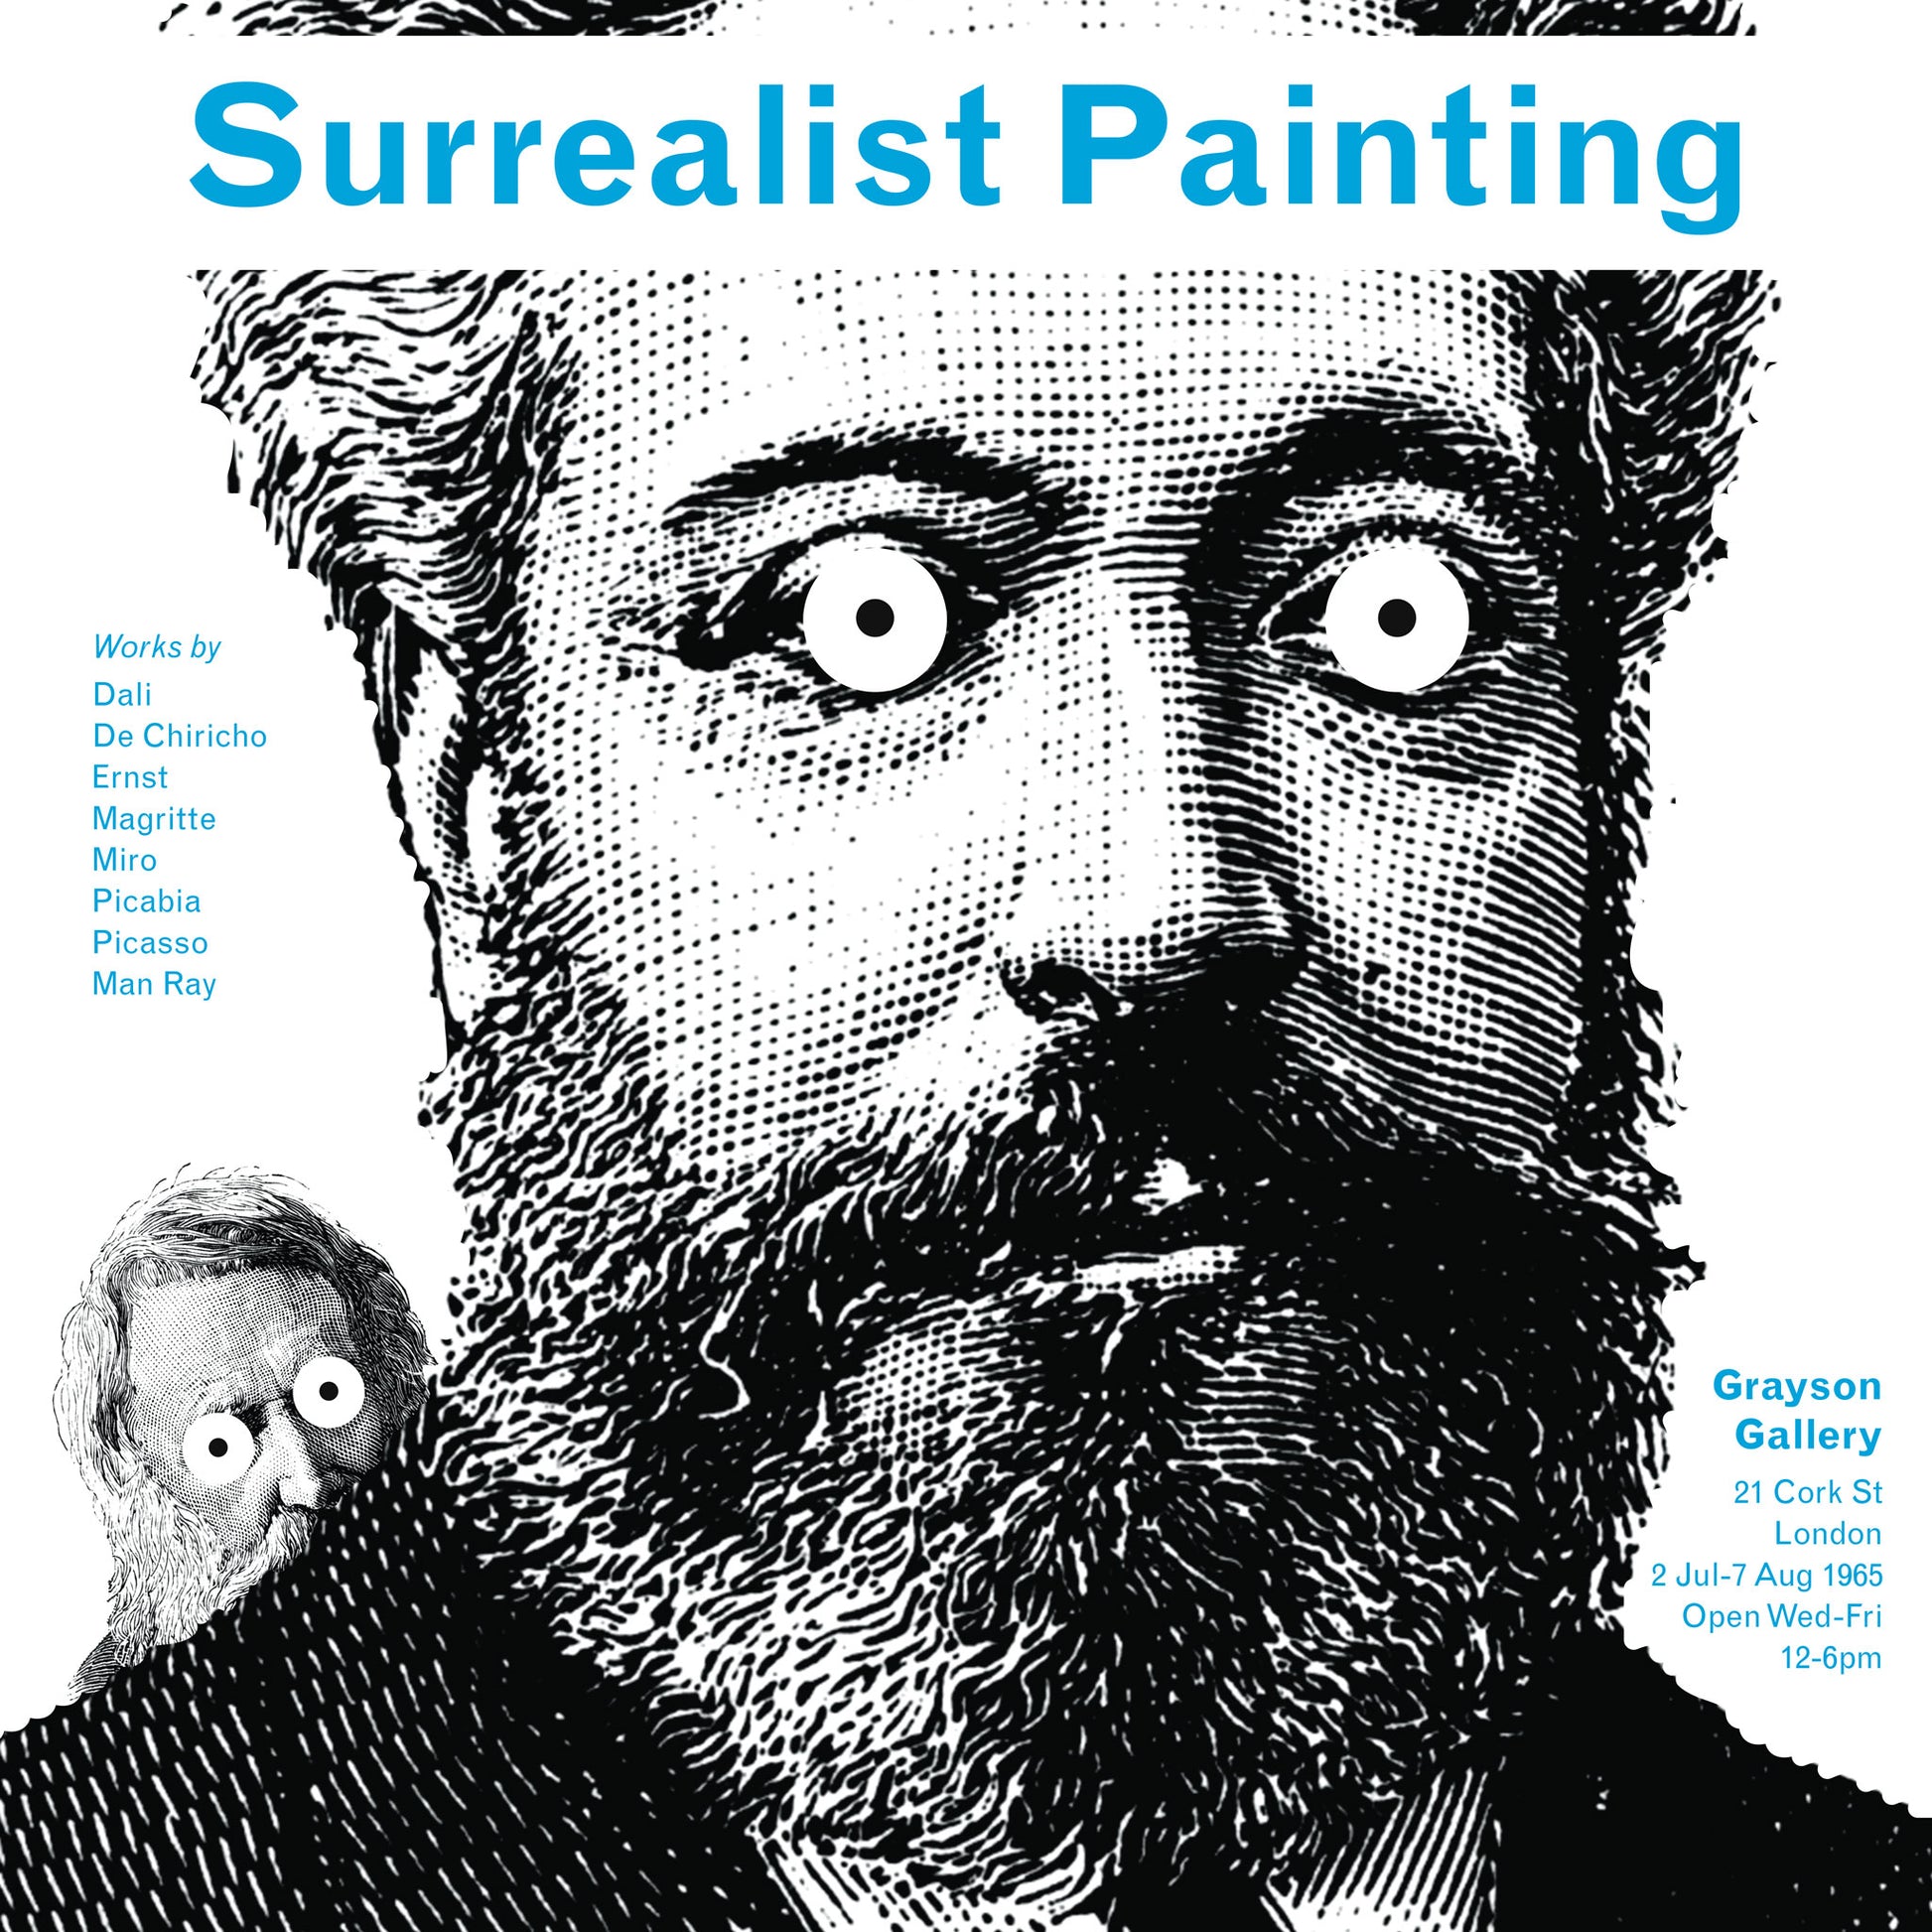 Surrealist Painting Exhibition Announcement Poster